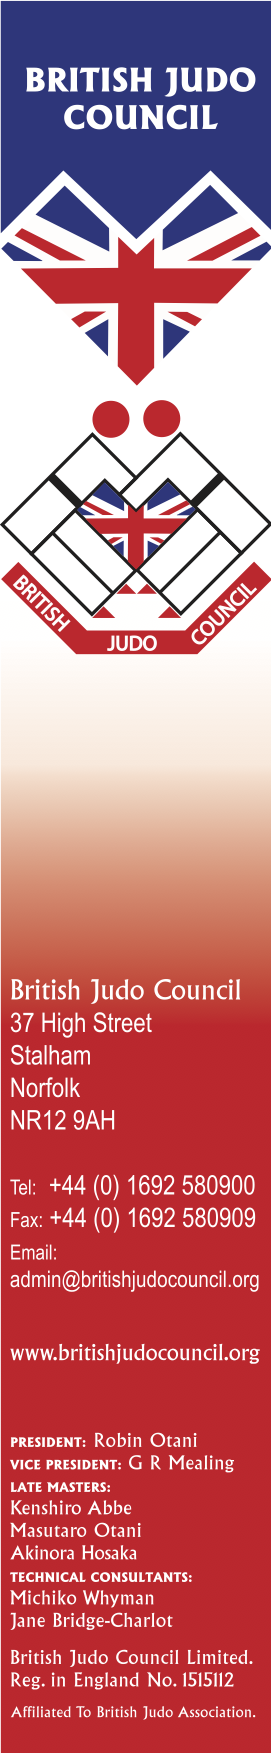 Bjc-logo-column